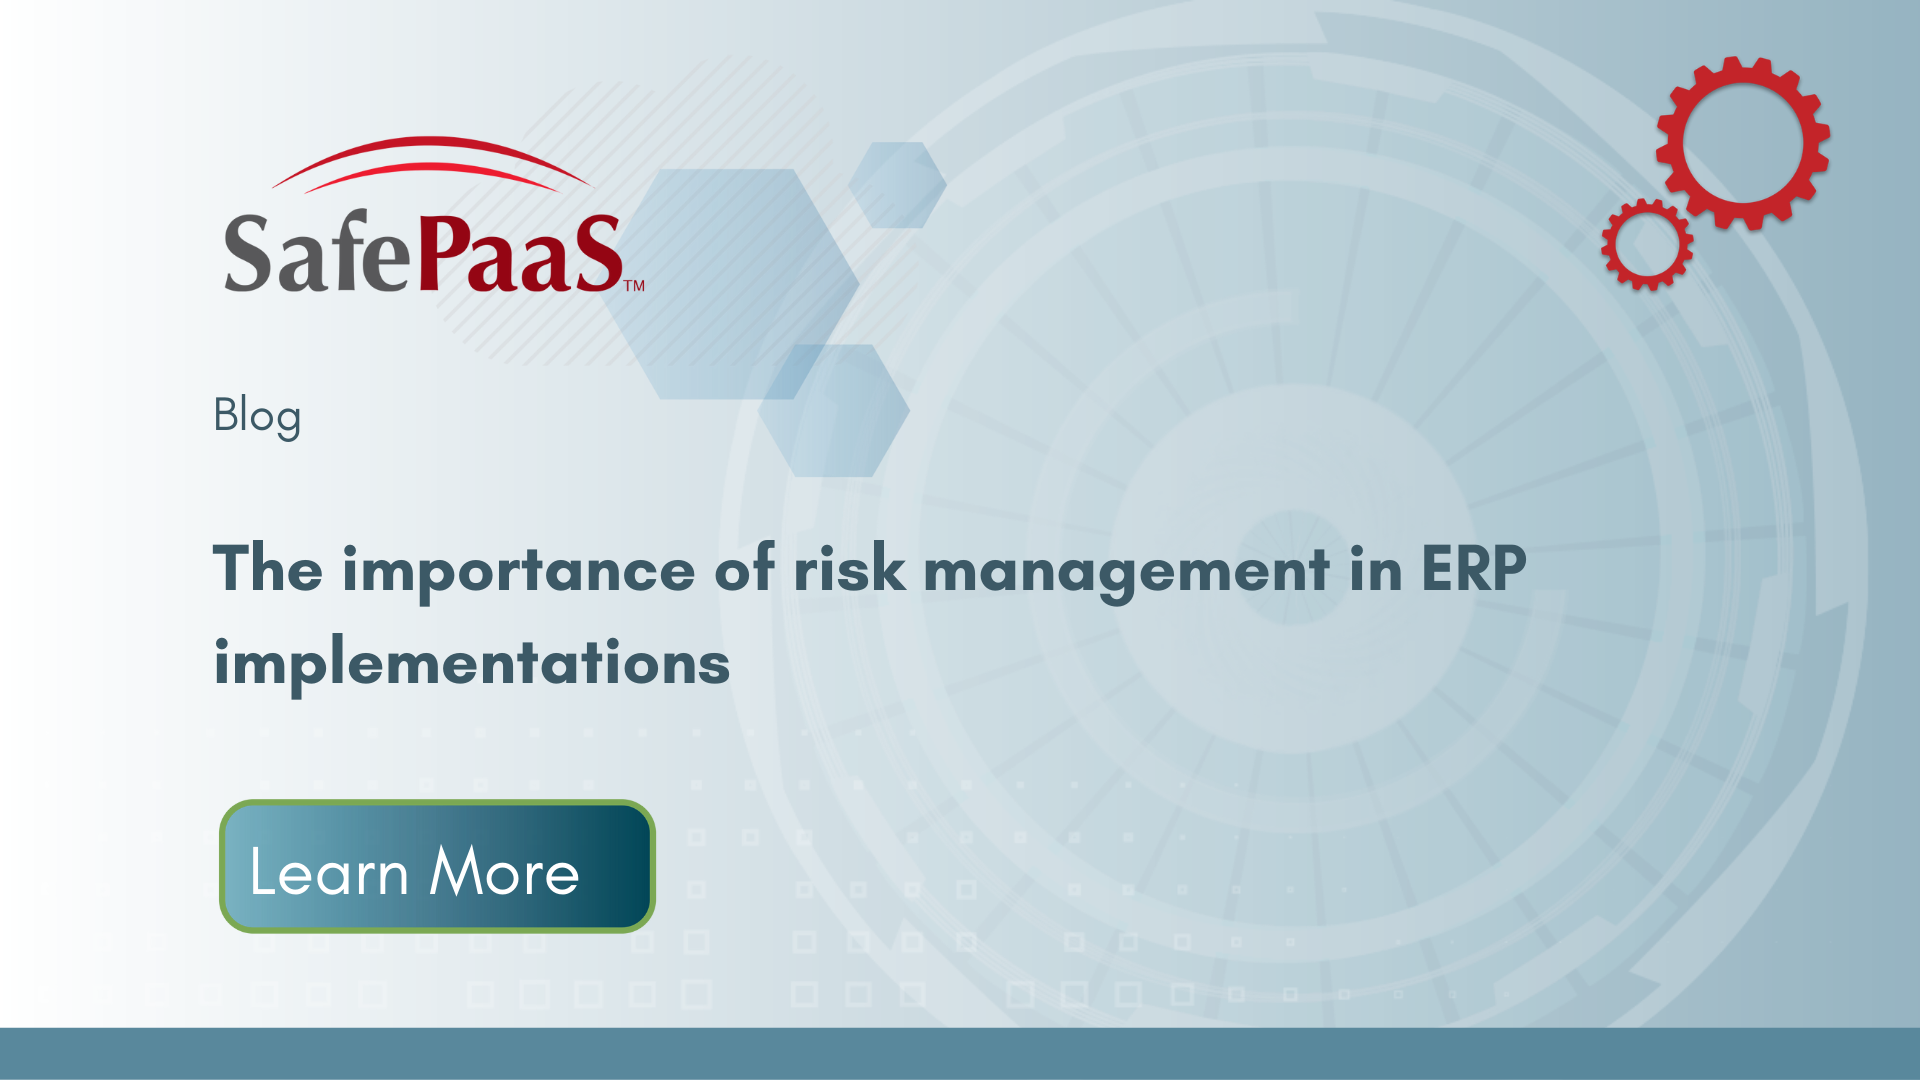 Risk management in ERP implementations